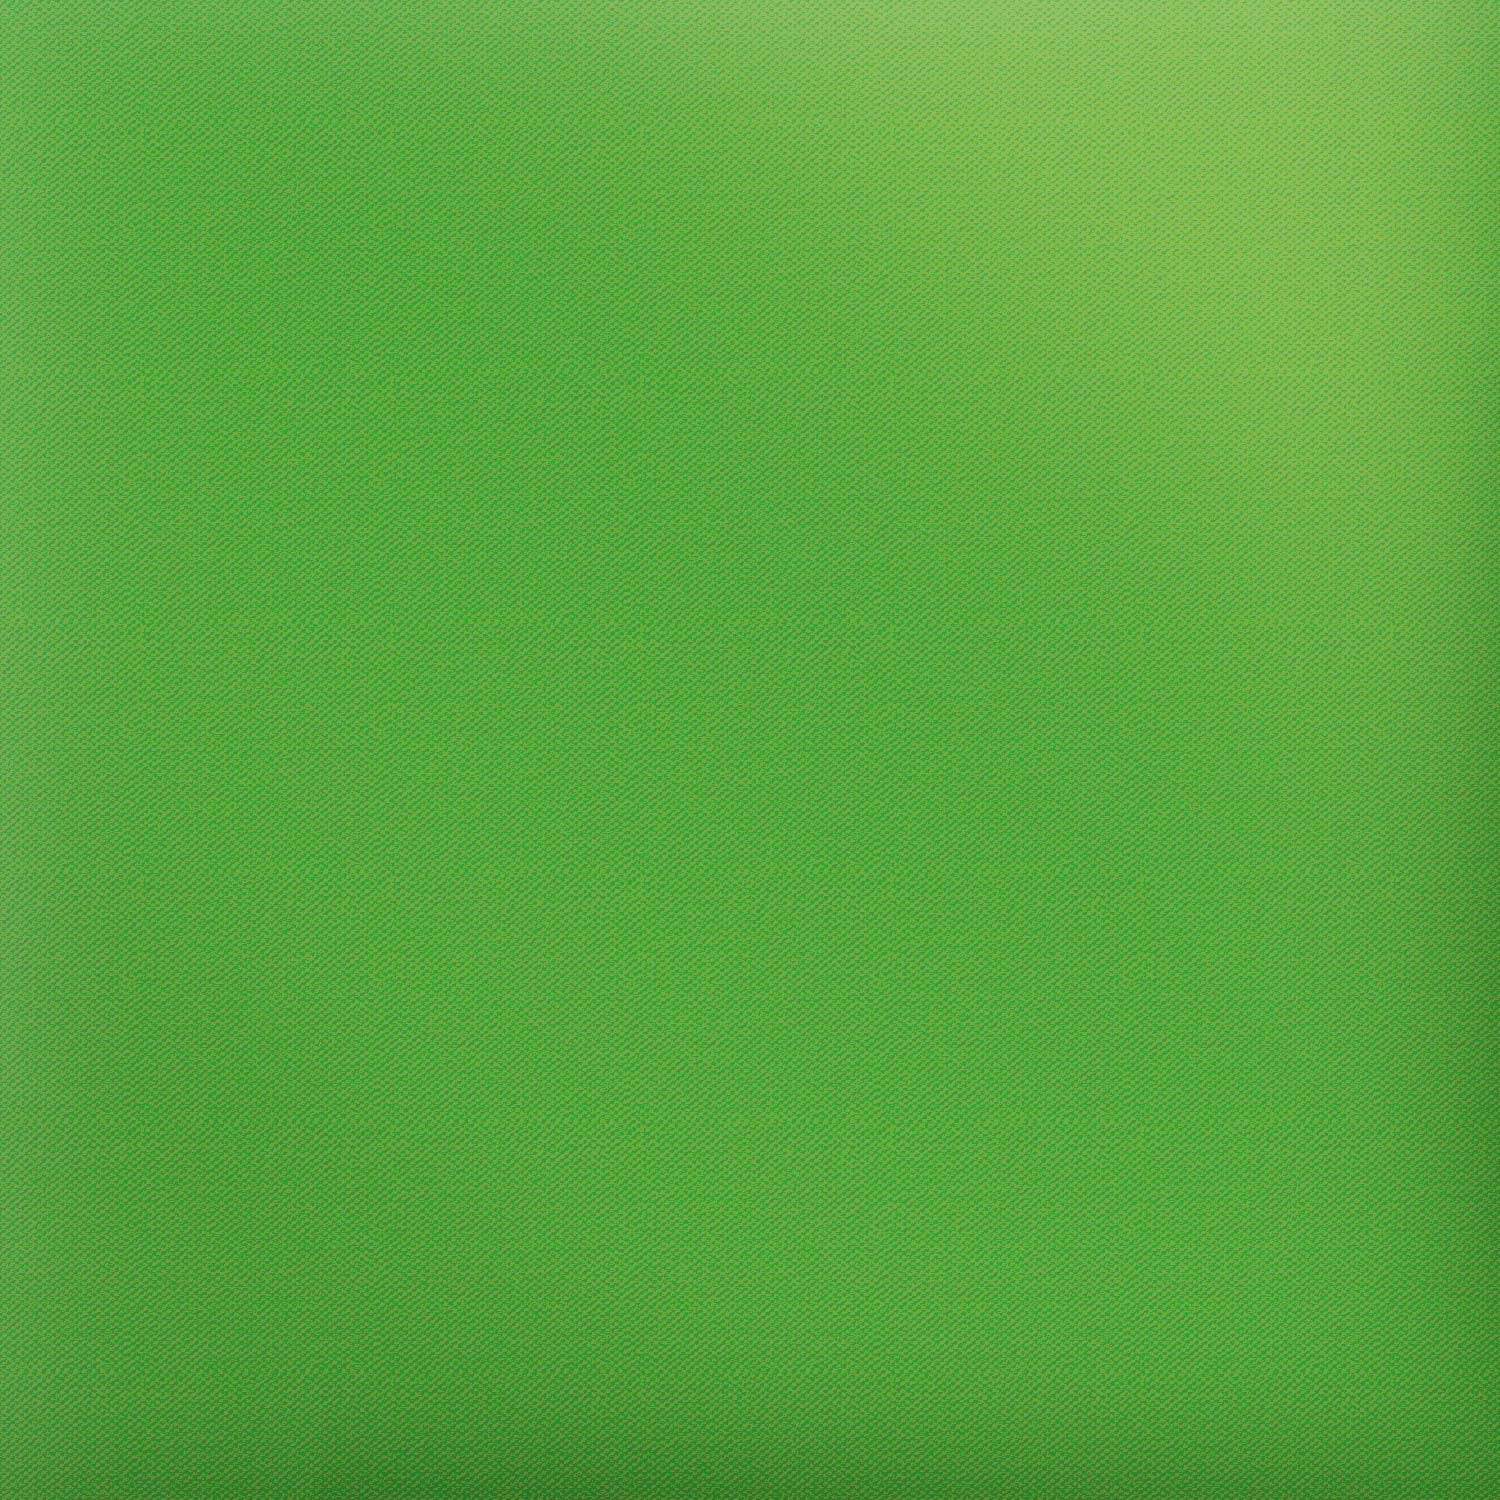 Green Apple HTV Iron On T-shirt Vinyl Green Apple Siser HTV heat